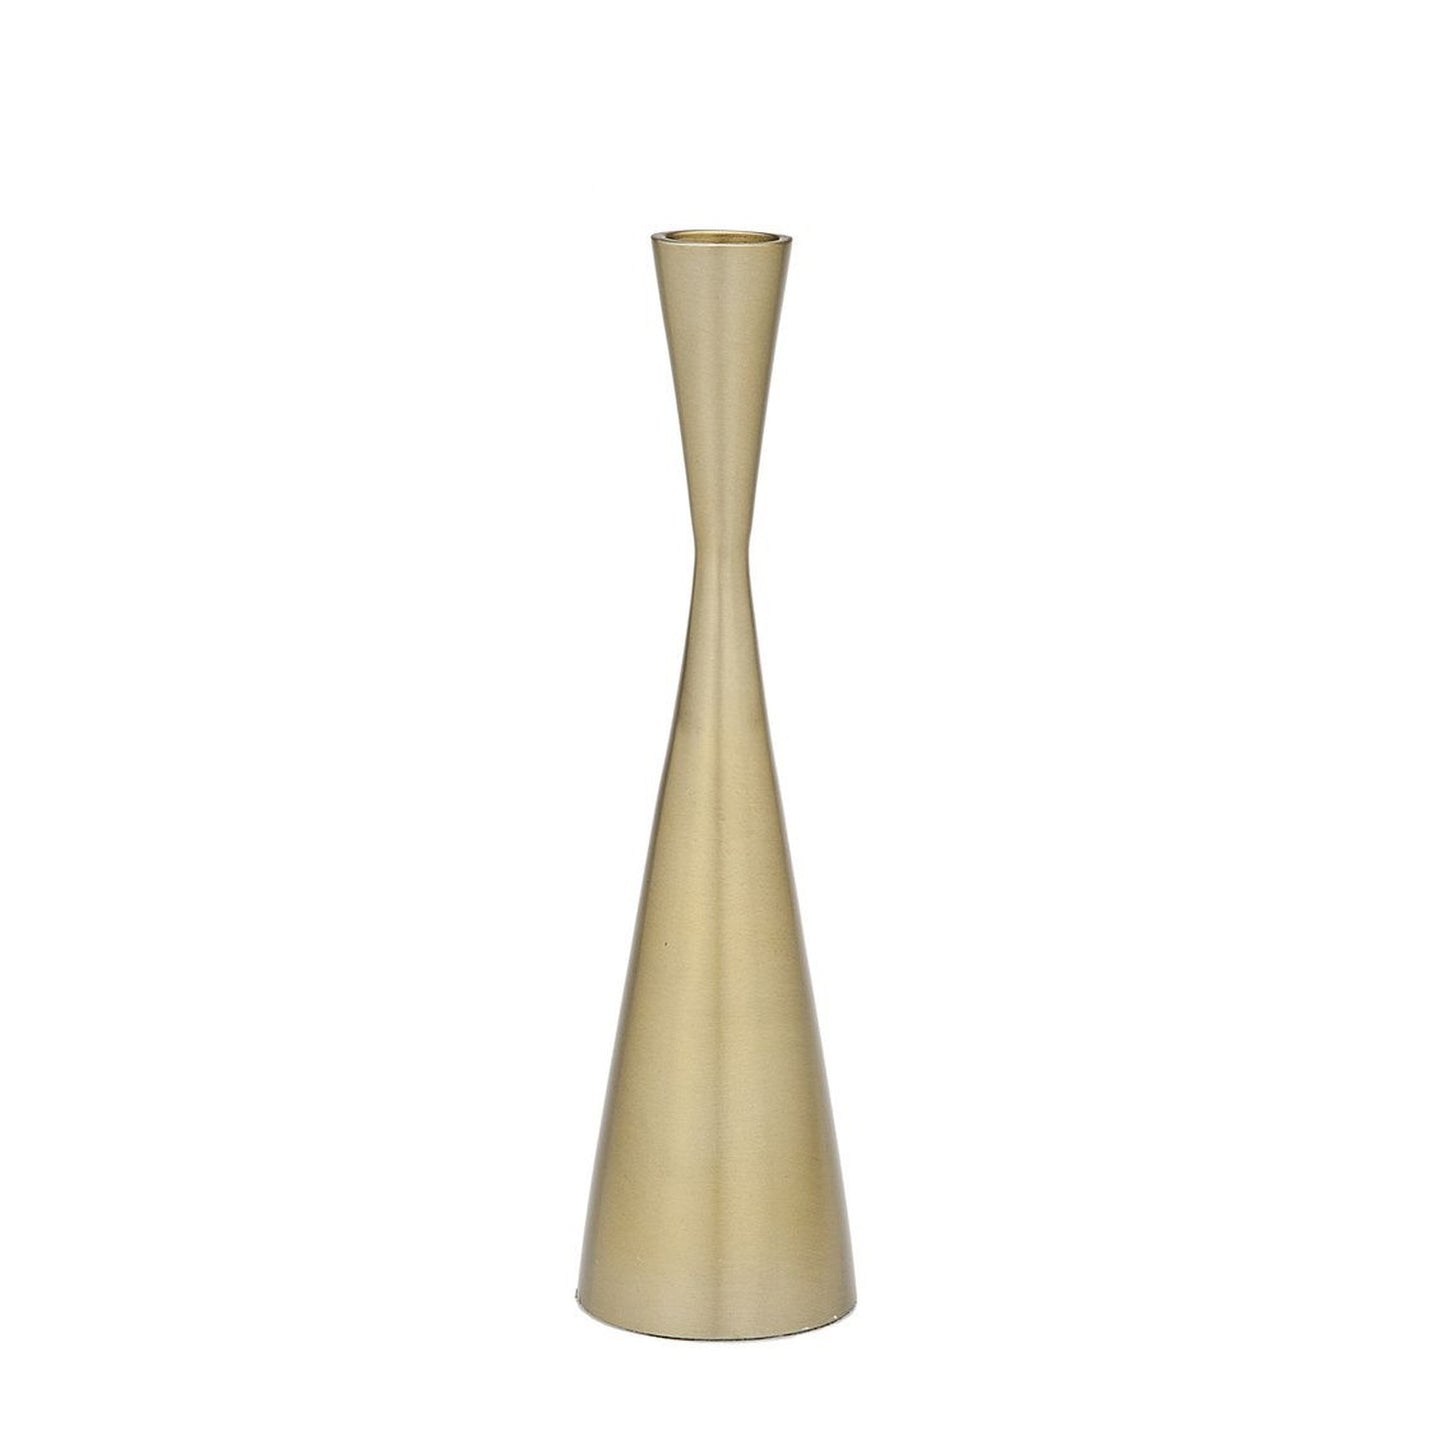 Godinger Hourglass Candlestick Gold 7.5"